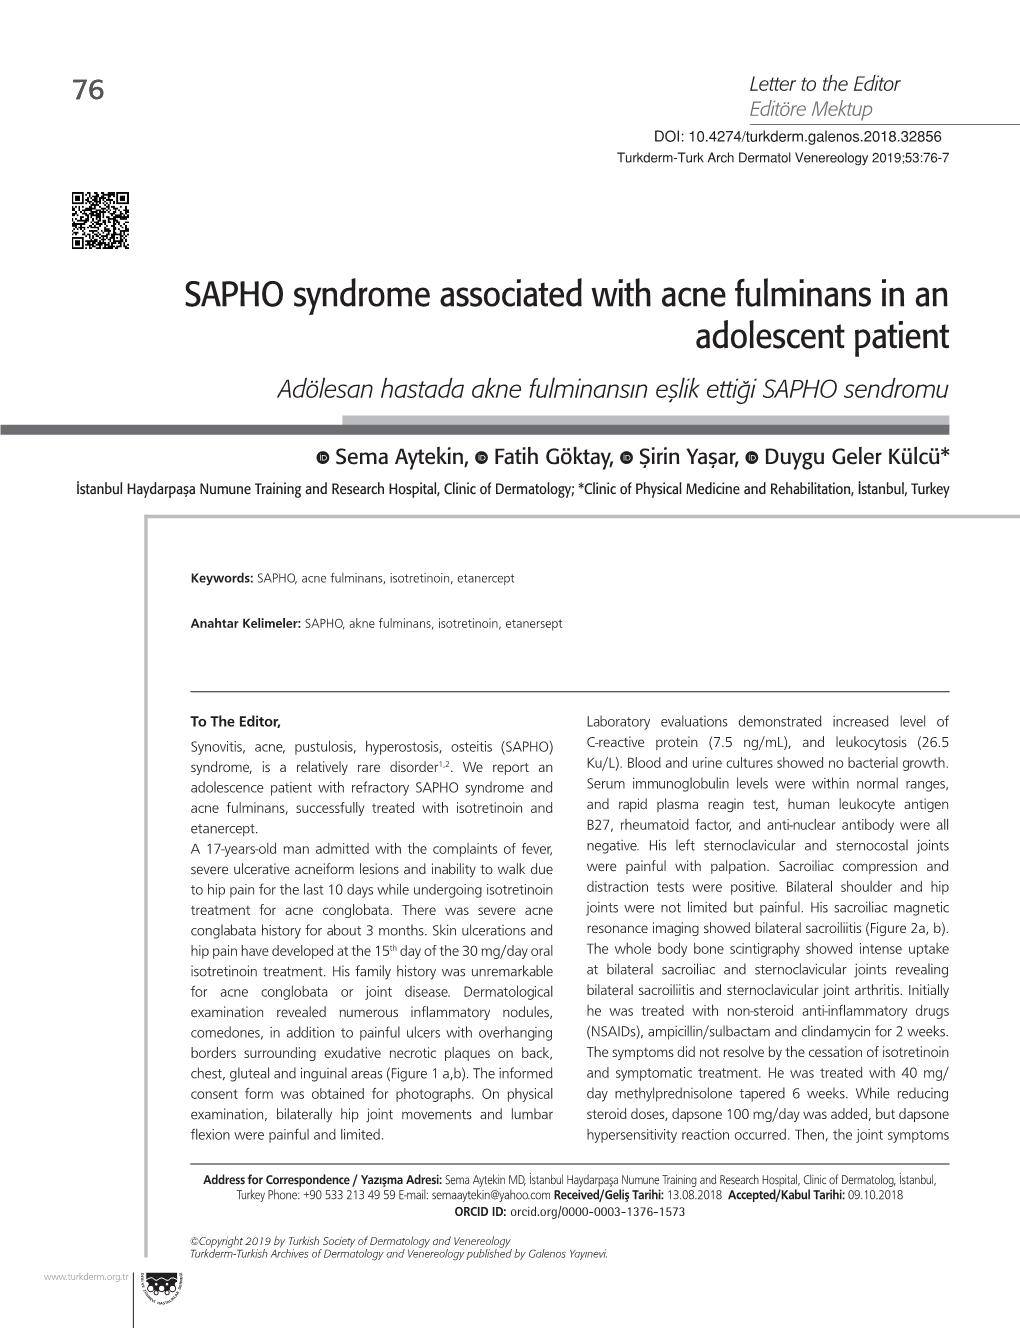 SAPHO Syndrome Associated with Acne Fulminans in an Adolescent Patient Adölesan Hastada Akne Fulminansın Eşlik Ettiği SAPHO Sendromu